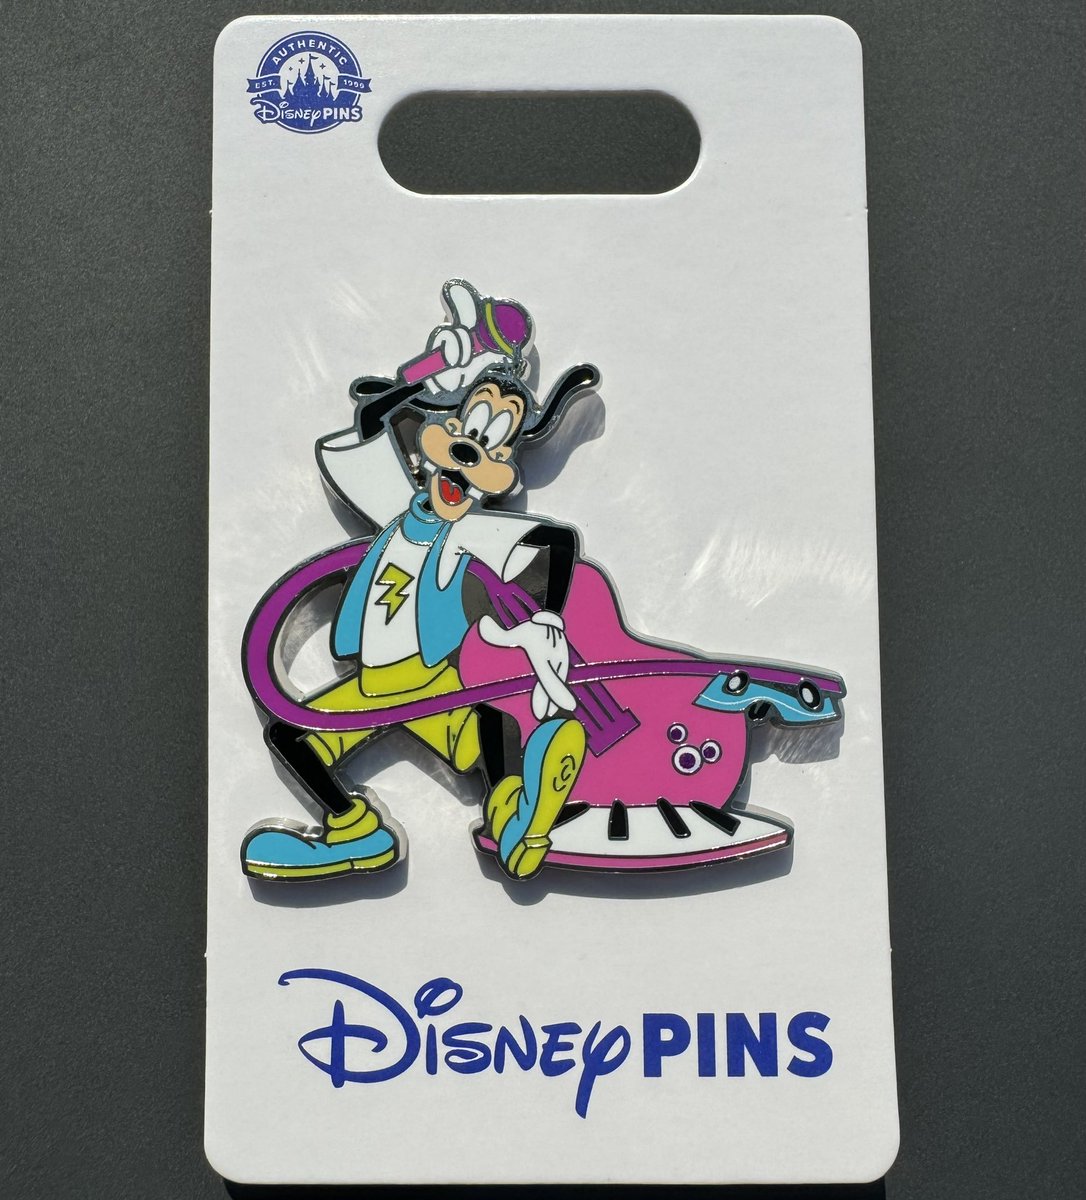 New Goofy Rock ‘n’ Roller Coaster pin at Walt Disney World: disneypinsblog.com/new-disney-pin…